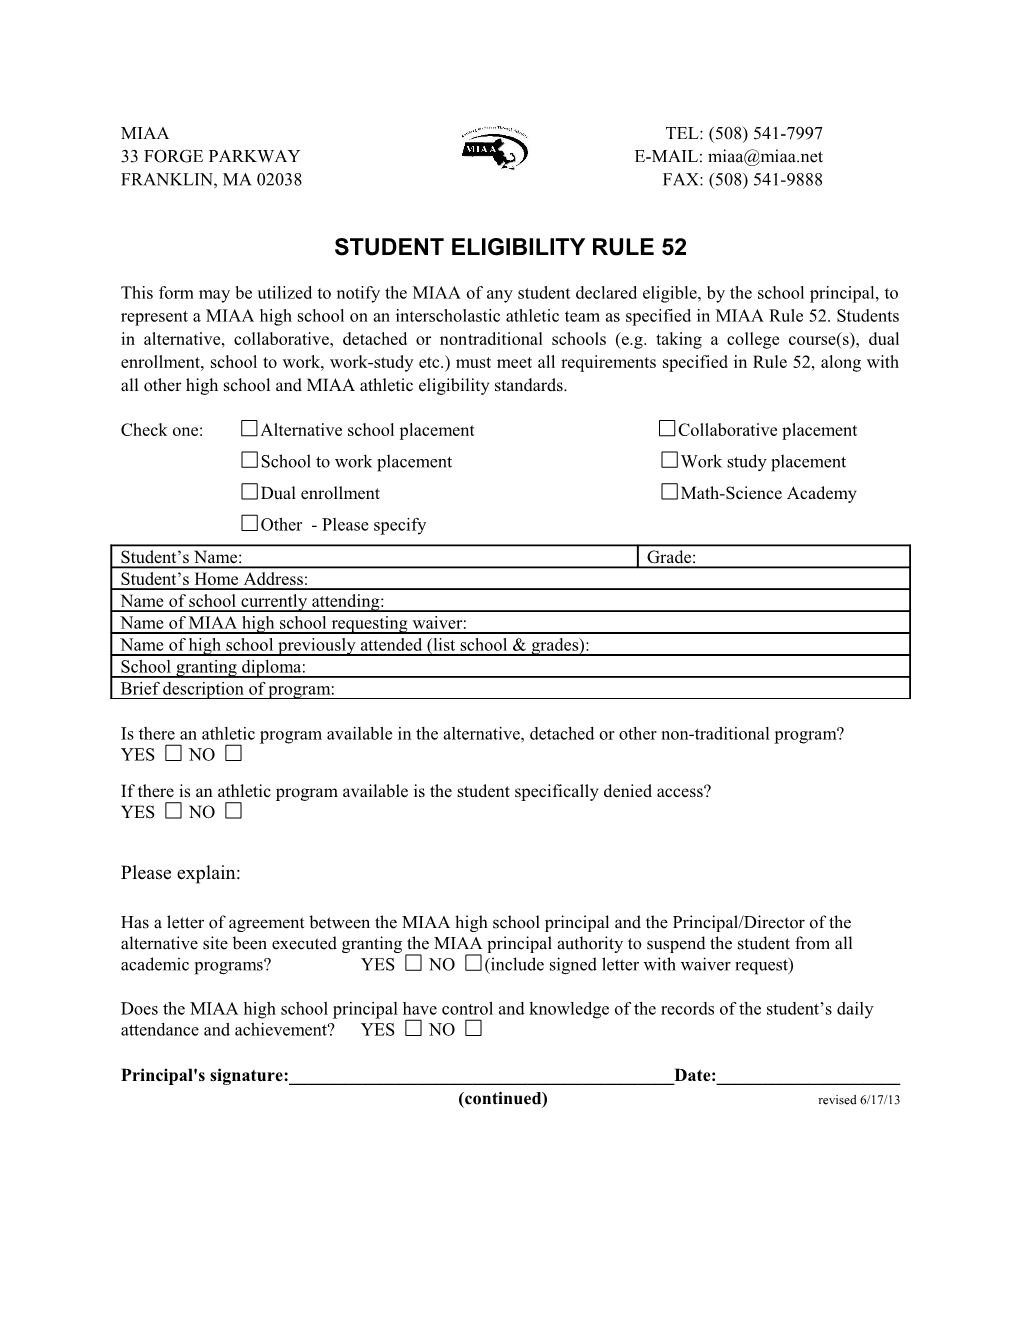 Student Eligibility Rule 52